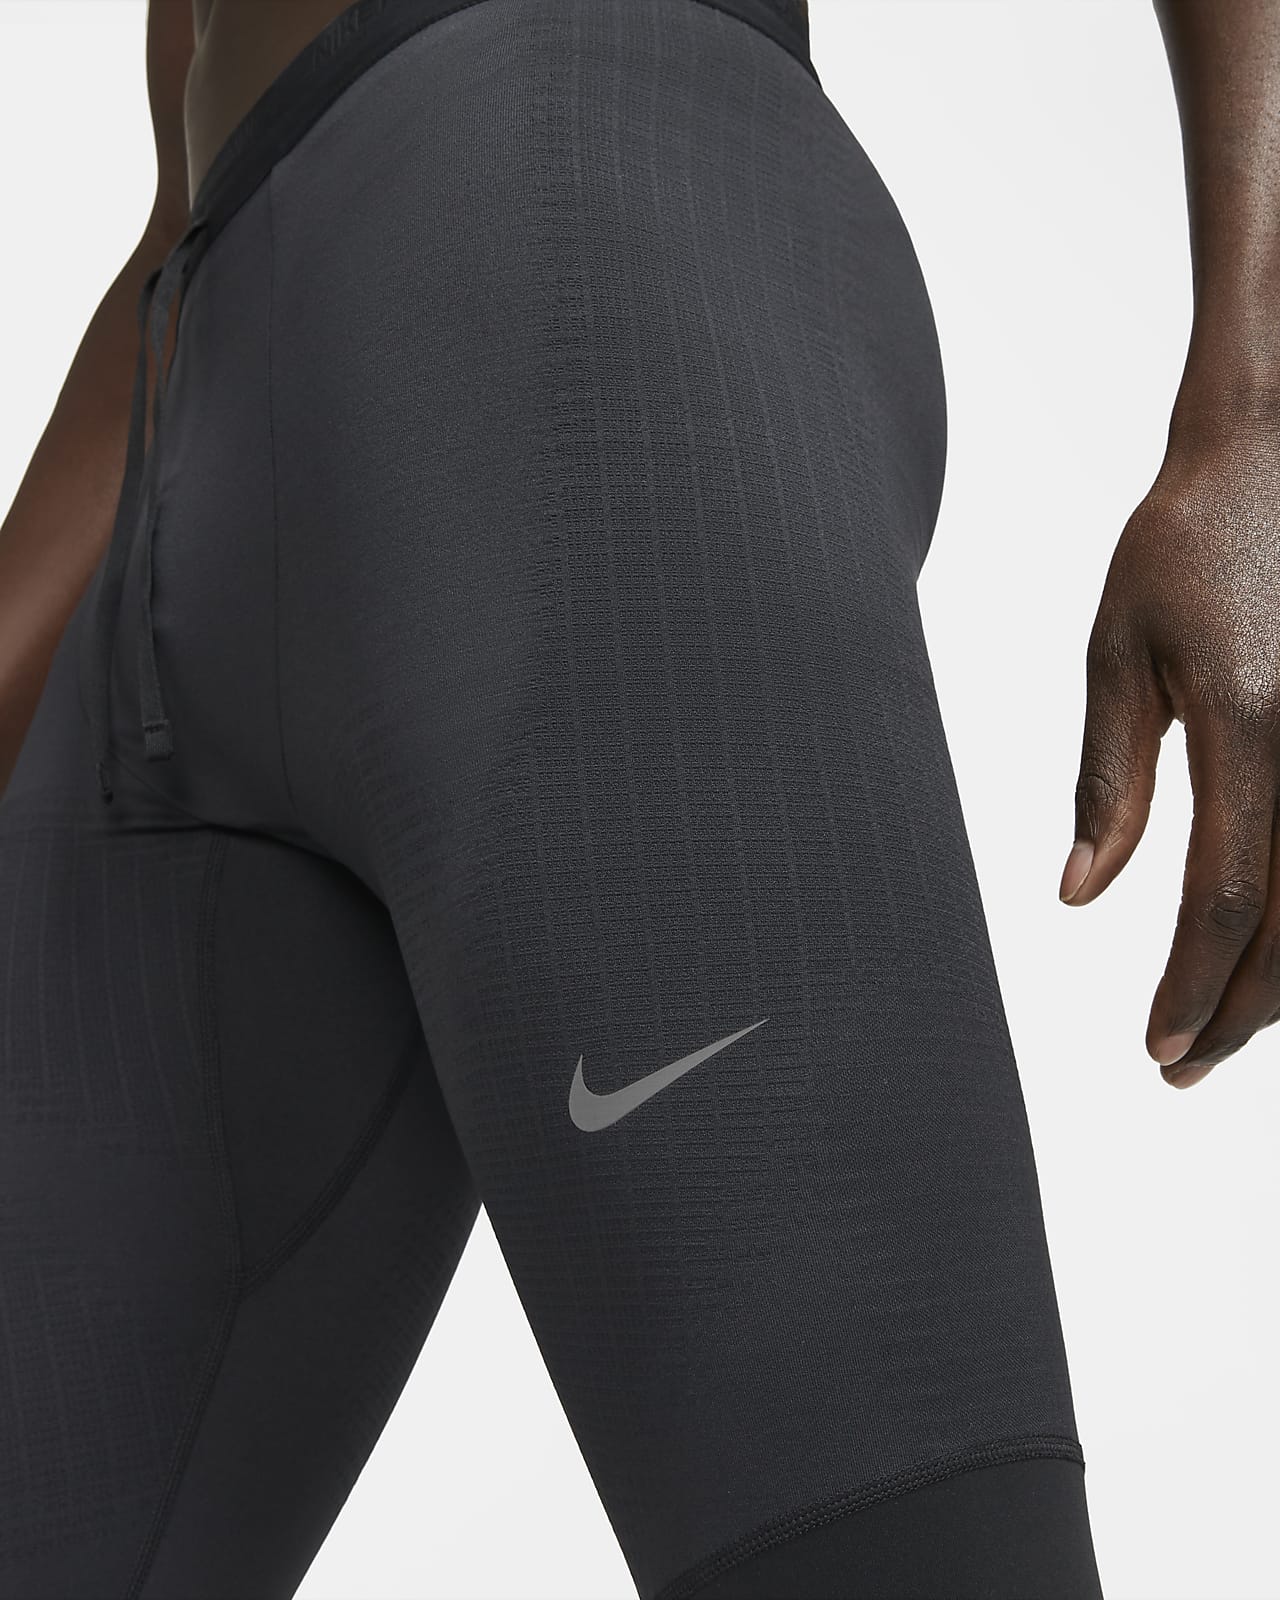 Mallas cortas caquis con logo Dri-FIT de Nike Running Plus